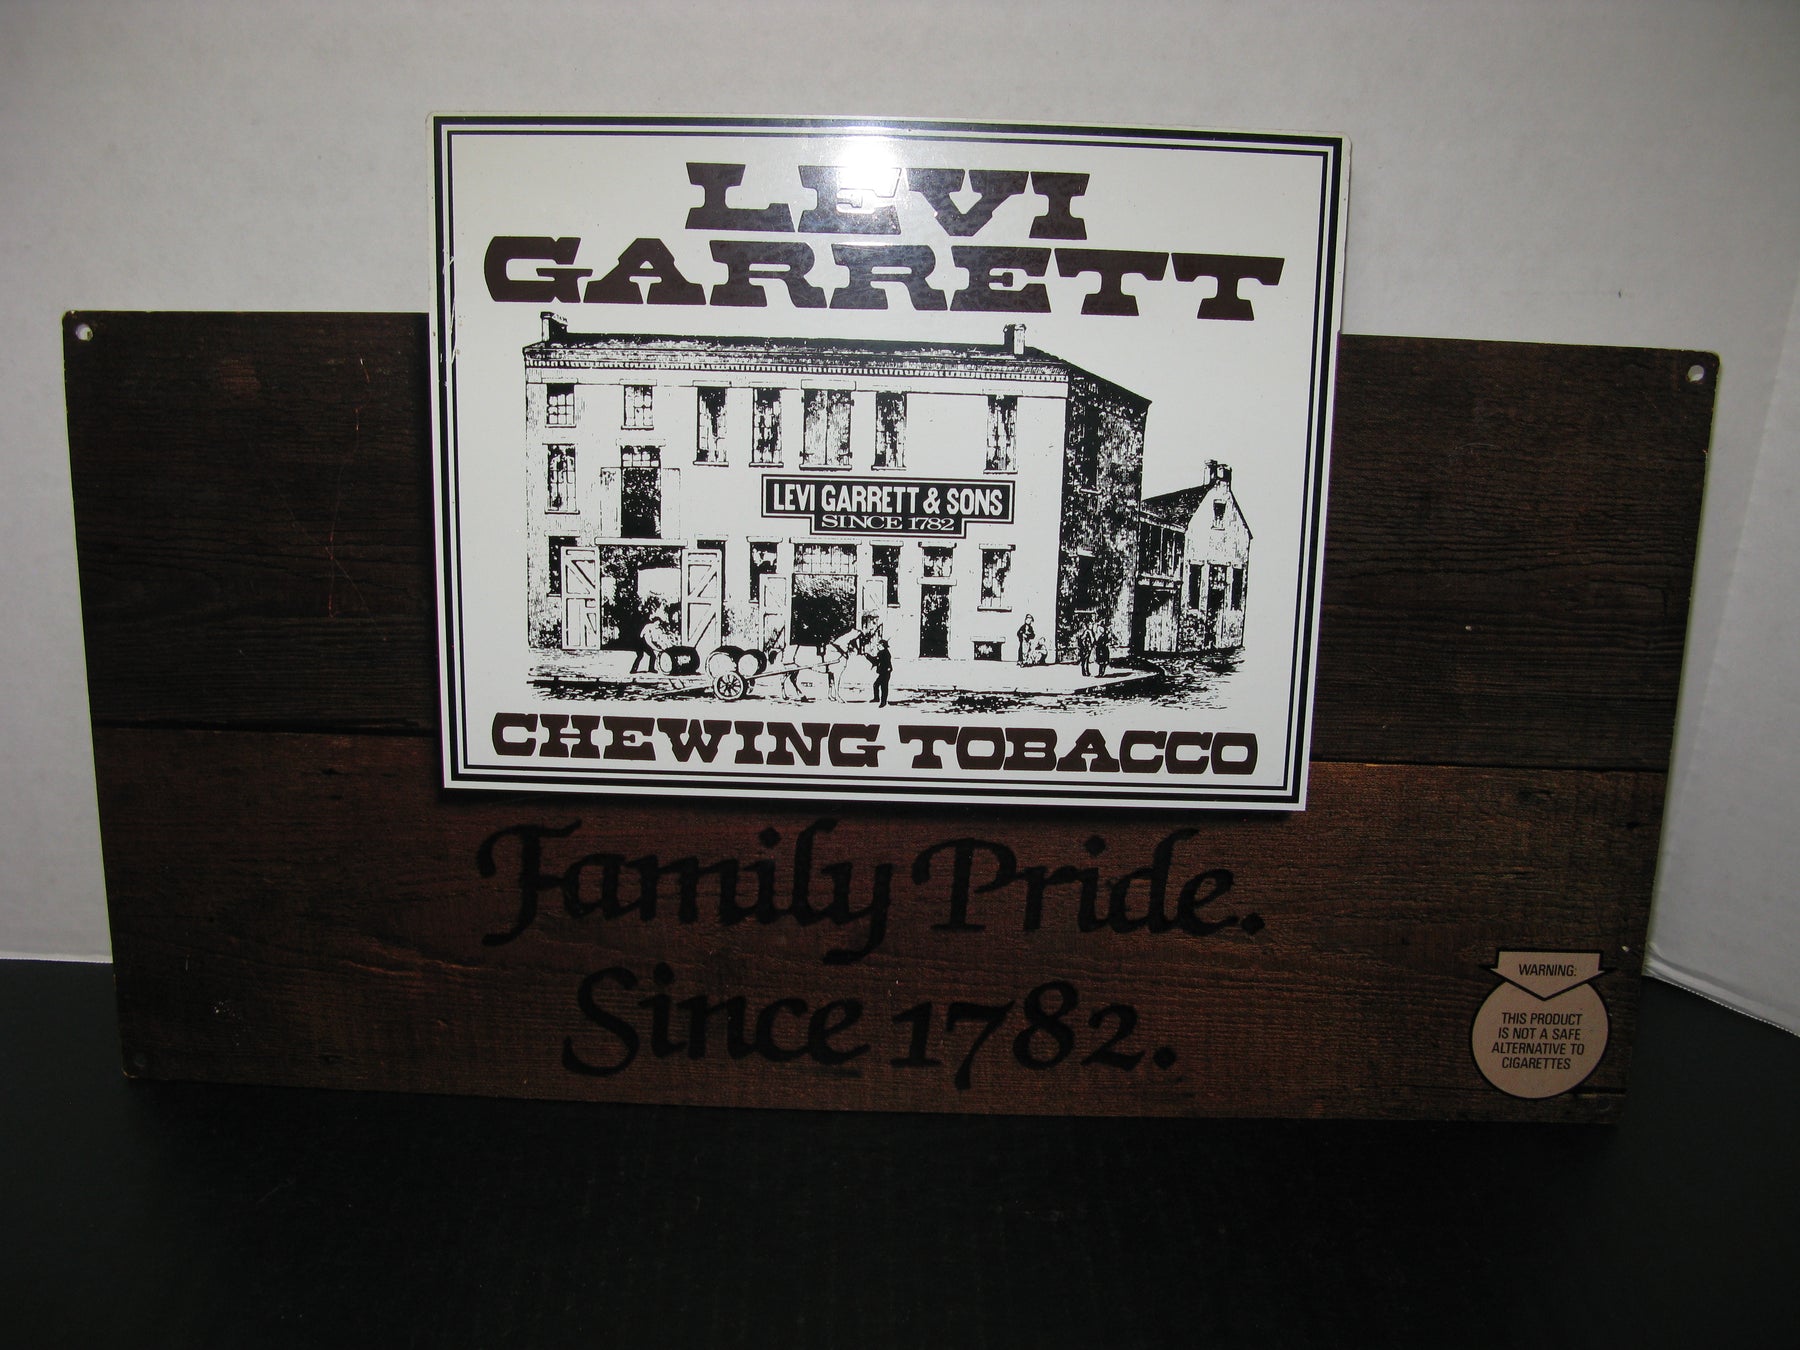 Levi Garrett Chewing Tobacco-Family Pride Since 1782 Metal Sign